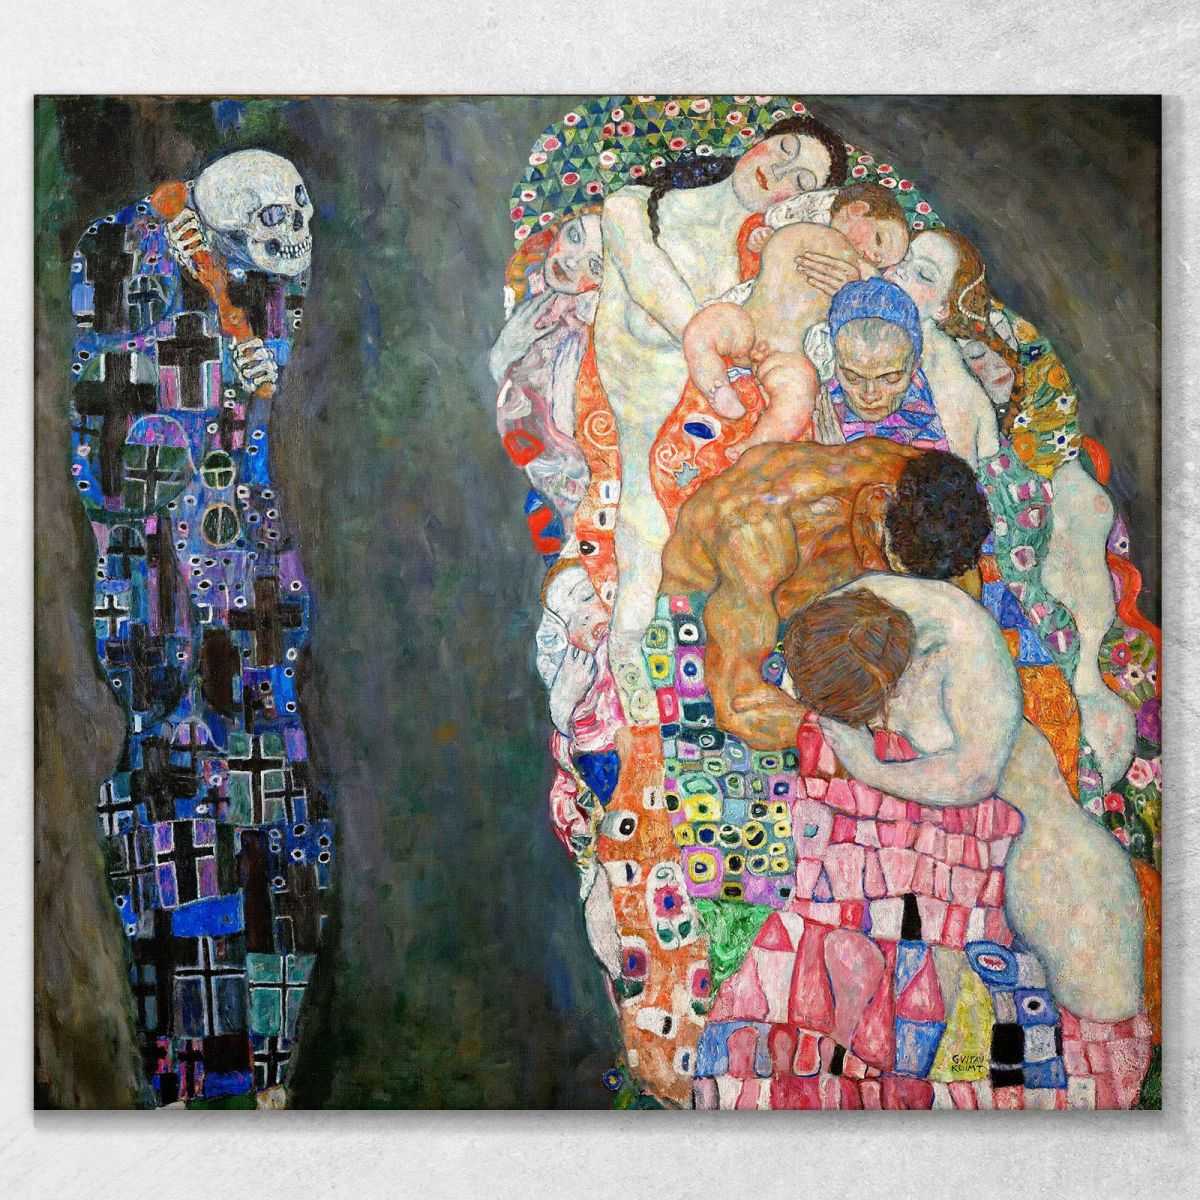 Death and life Gustav Klimt canvas print KG13